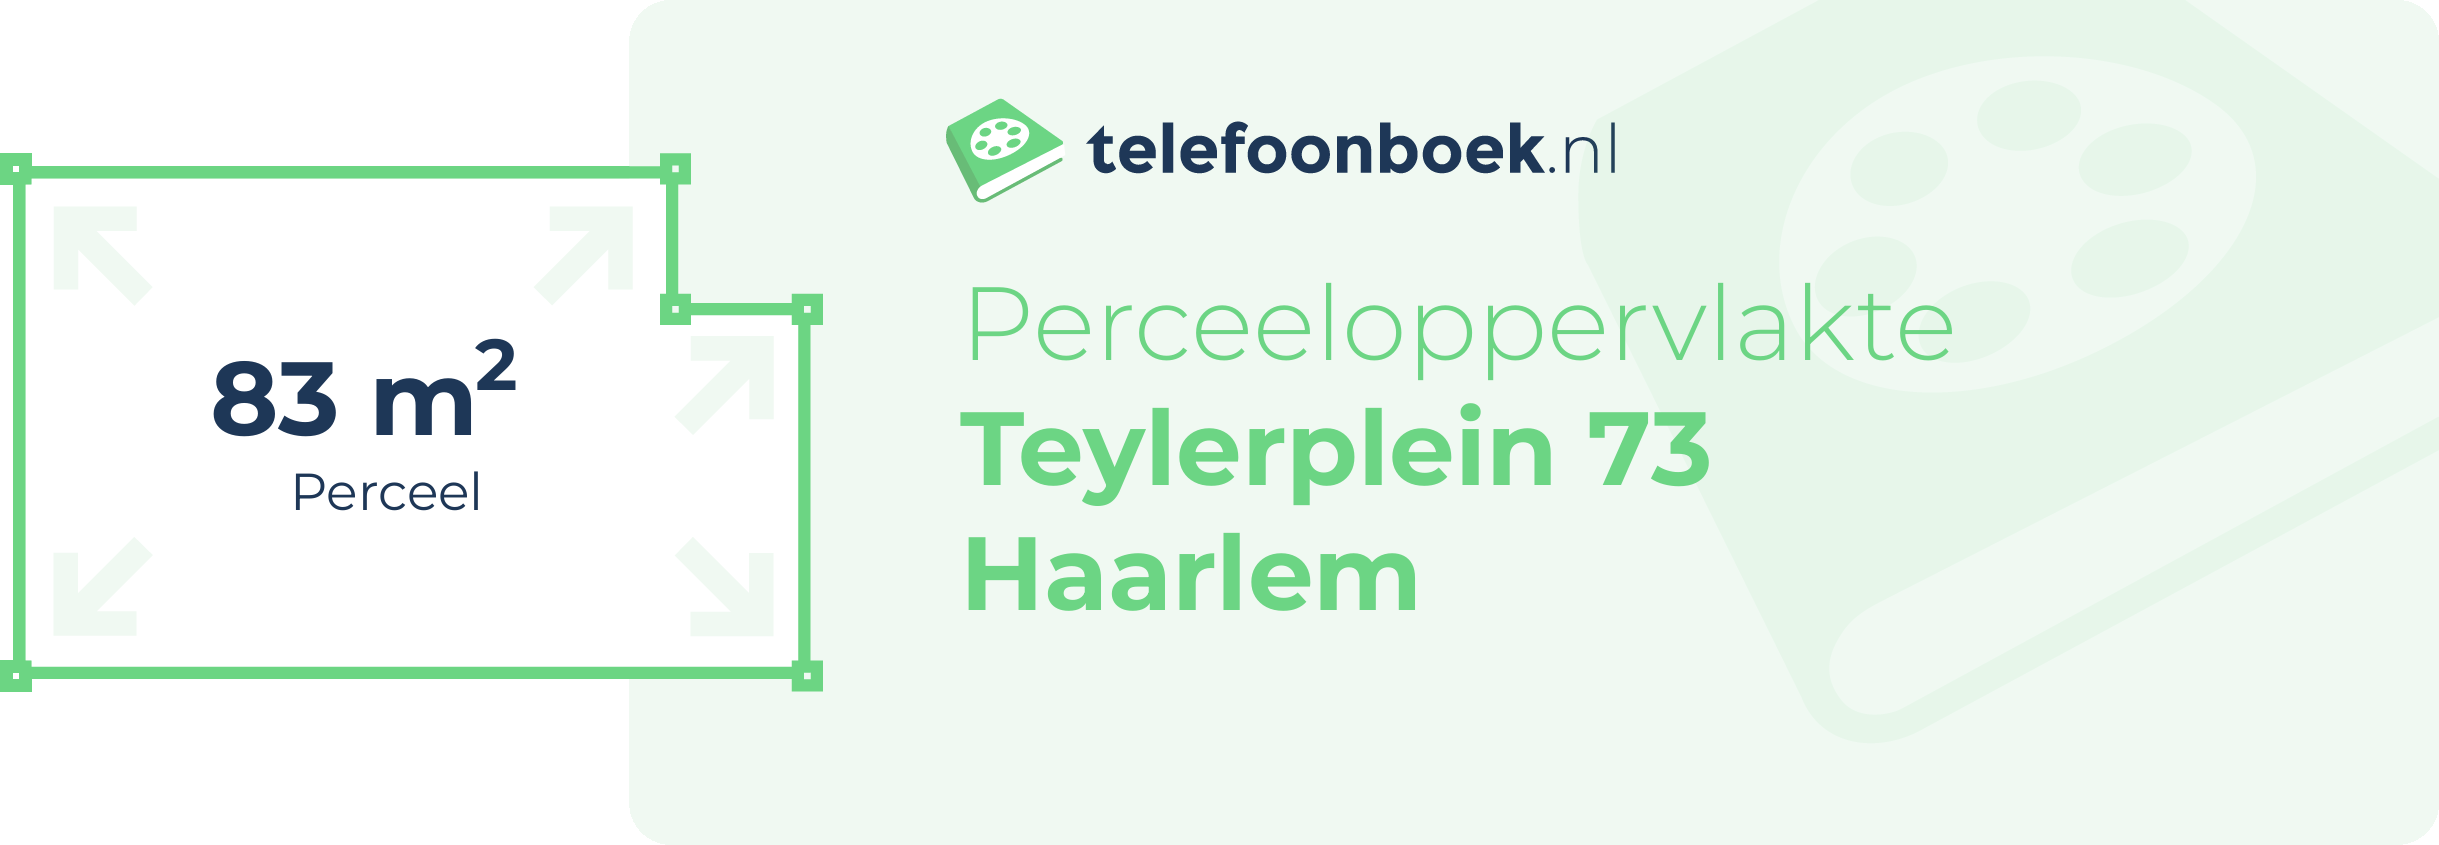 Perceeloppervlakte Teylerplein 73 Haarlem